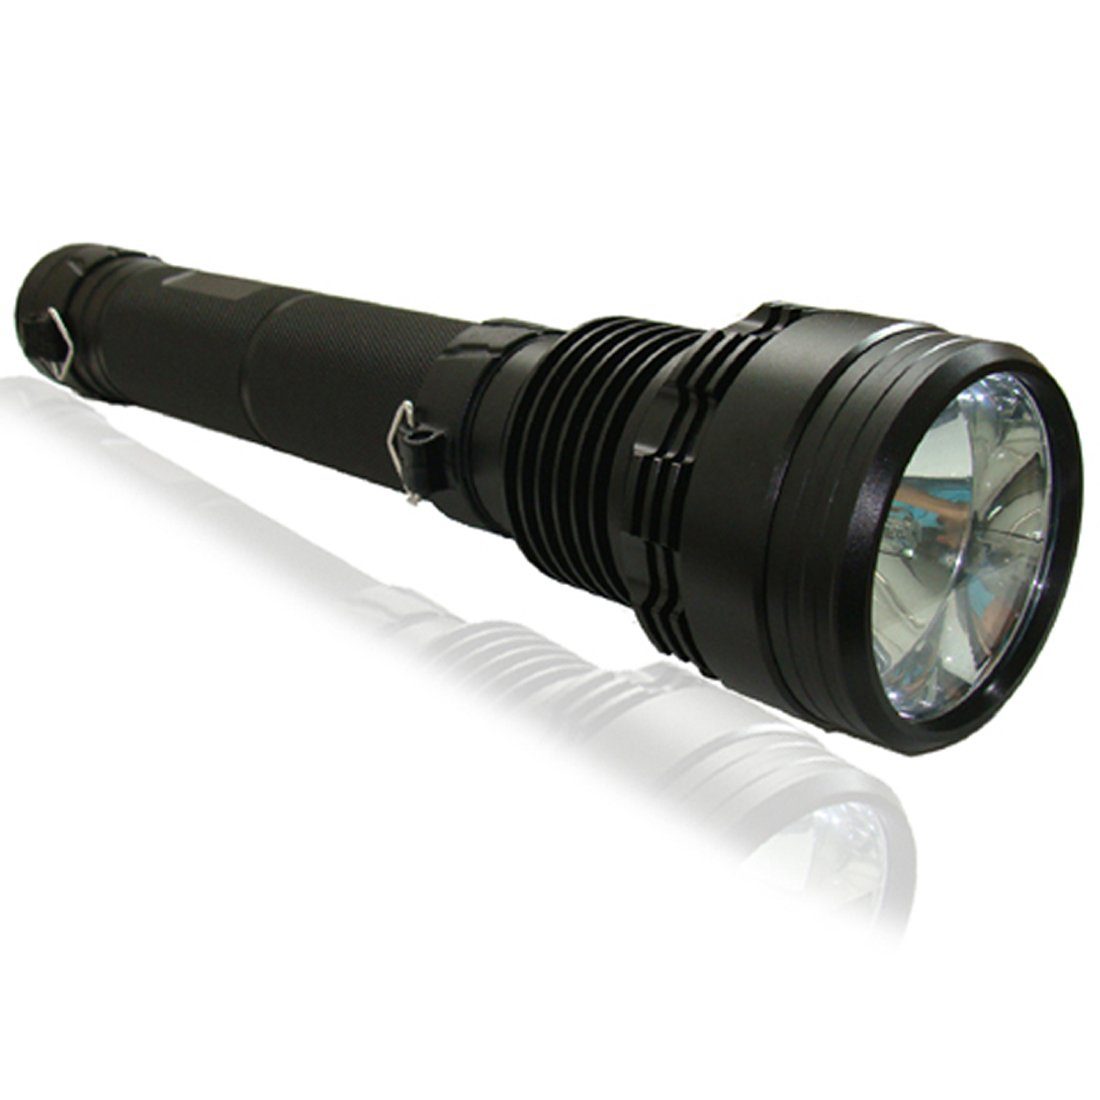 Bolwins Taschenlampe L16D 85W HID XENON Taschenlampe Flashlight TORCH 6600mAH 85W 3x Stufe